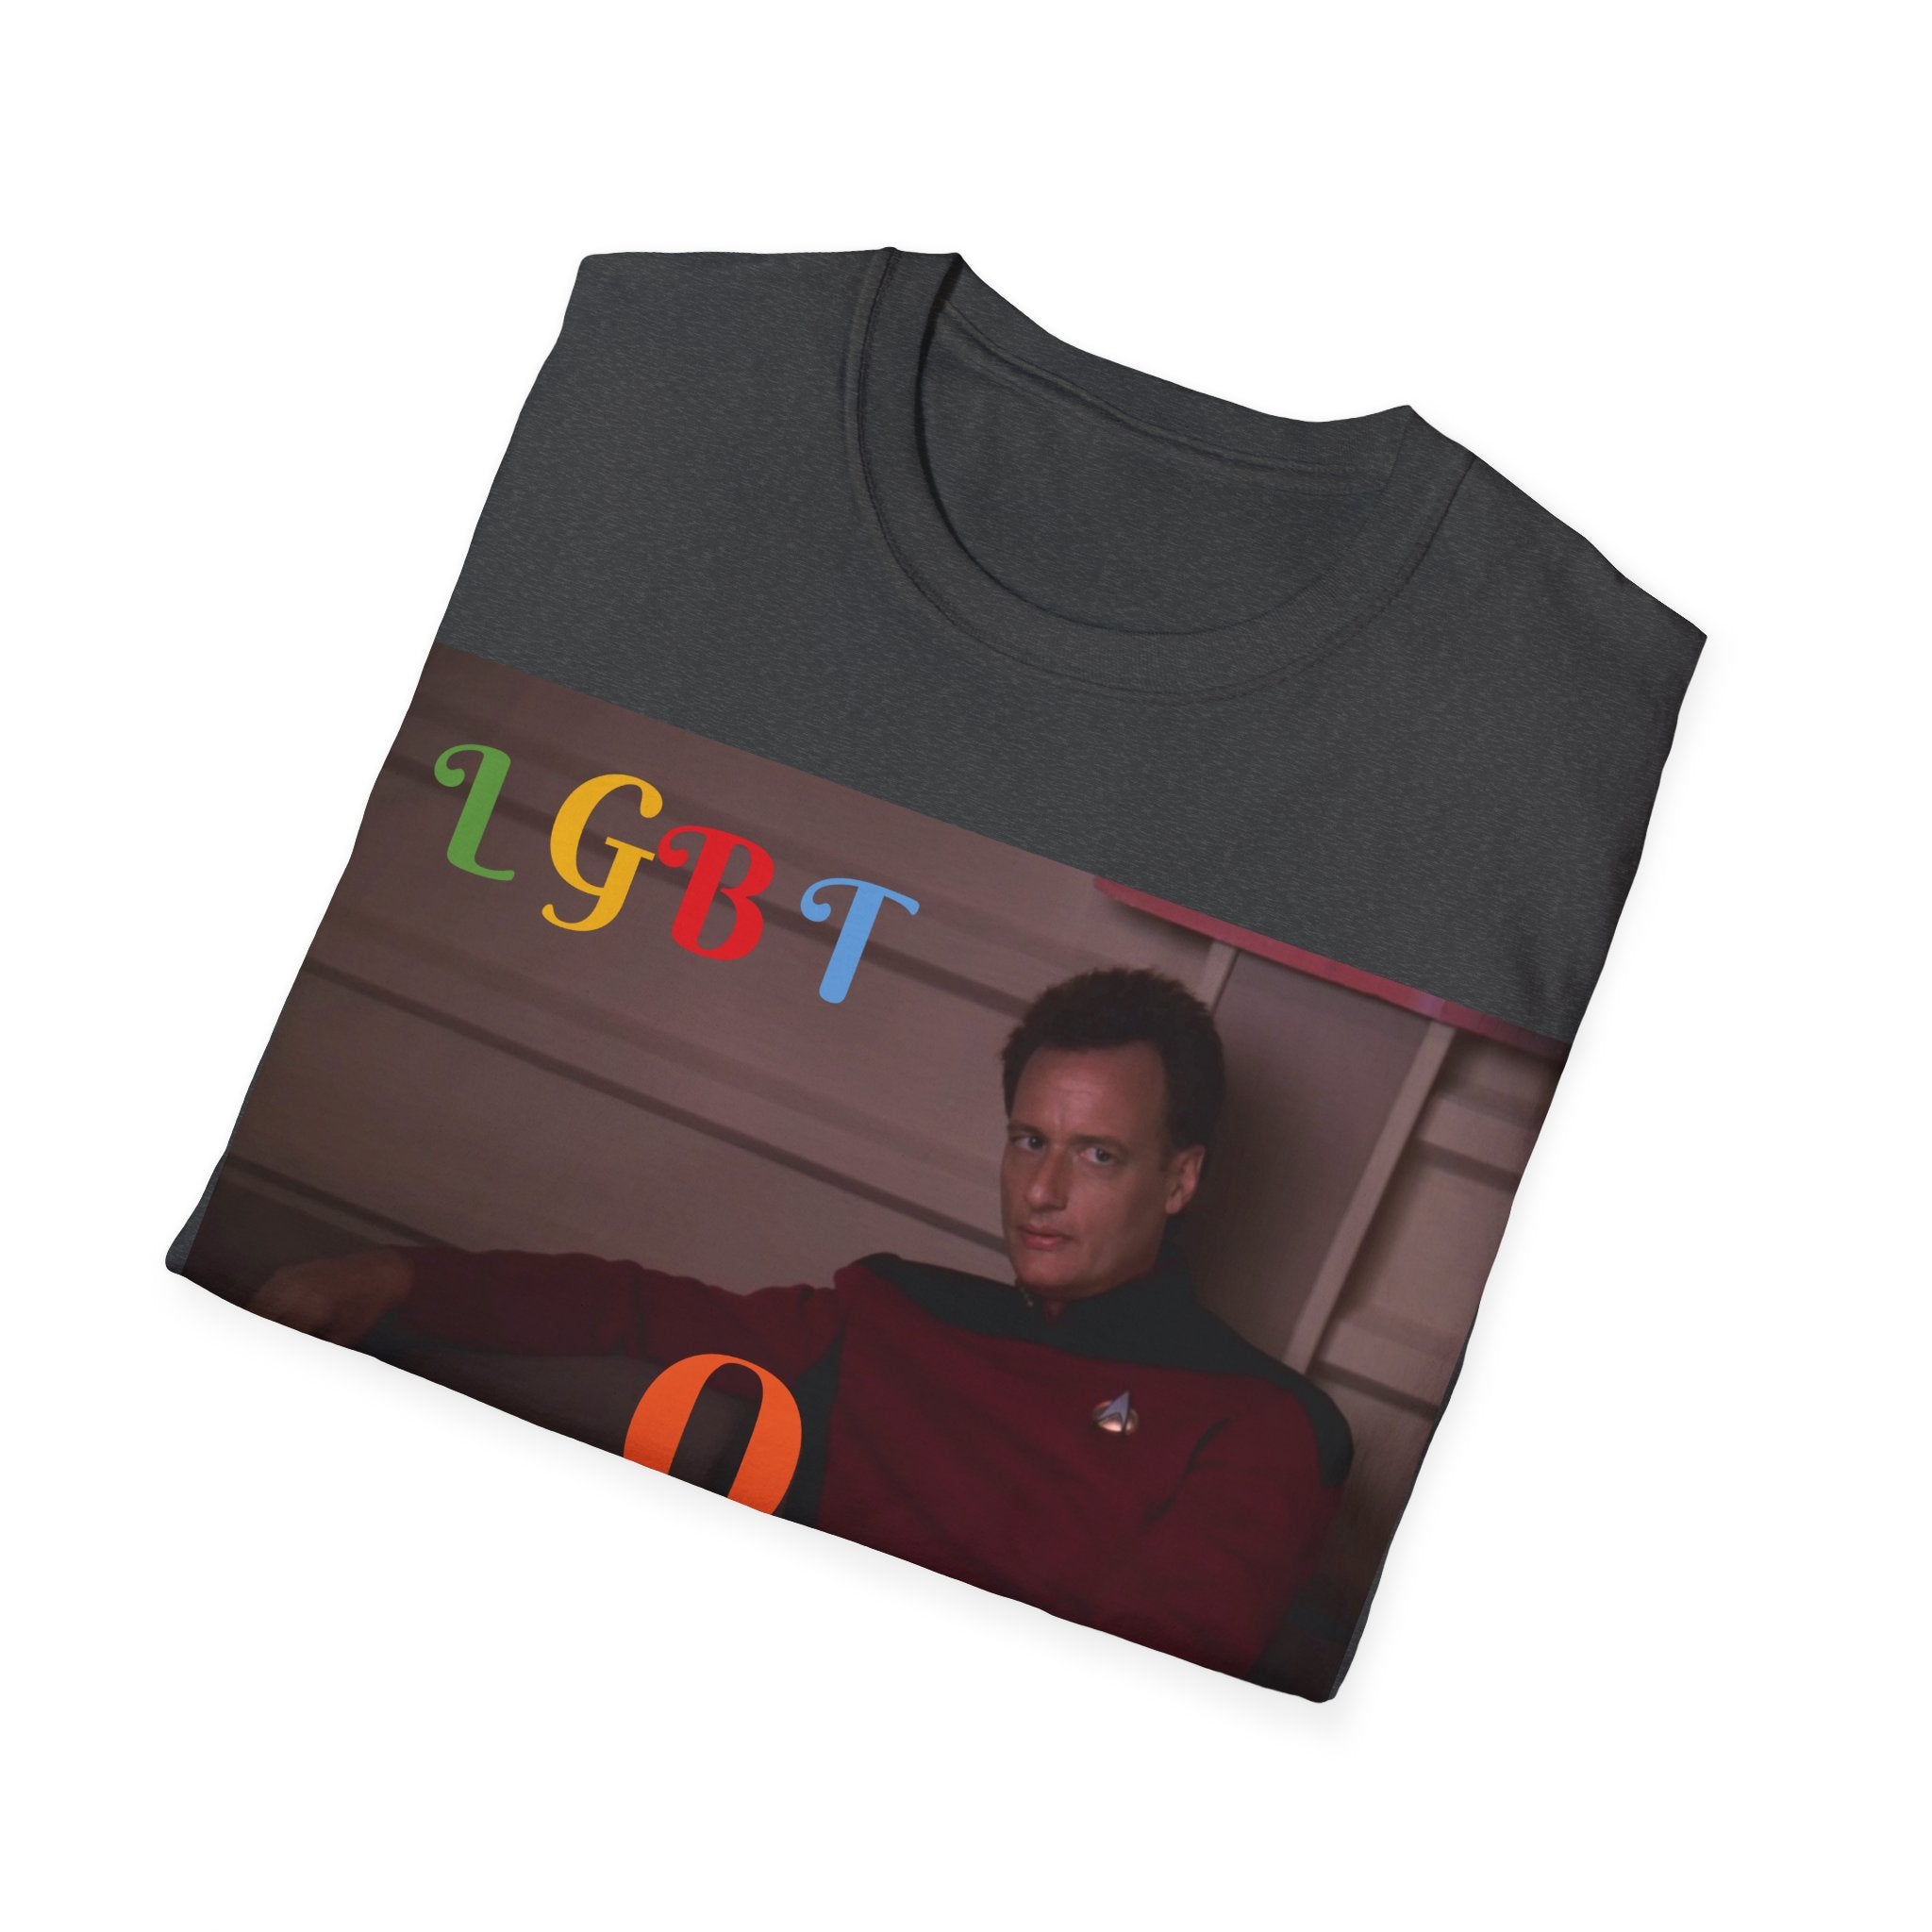 LGBTQ Pride Shirt Trek Q Funny Shirt Unisex Sci-Fi Pride Tee Rainbow Trekker T-Shirt - Queer Sci-Fi Fan Top Inclusive Space Apparel T-Shirt